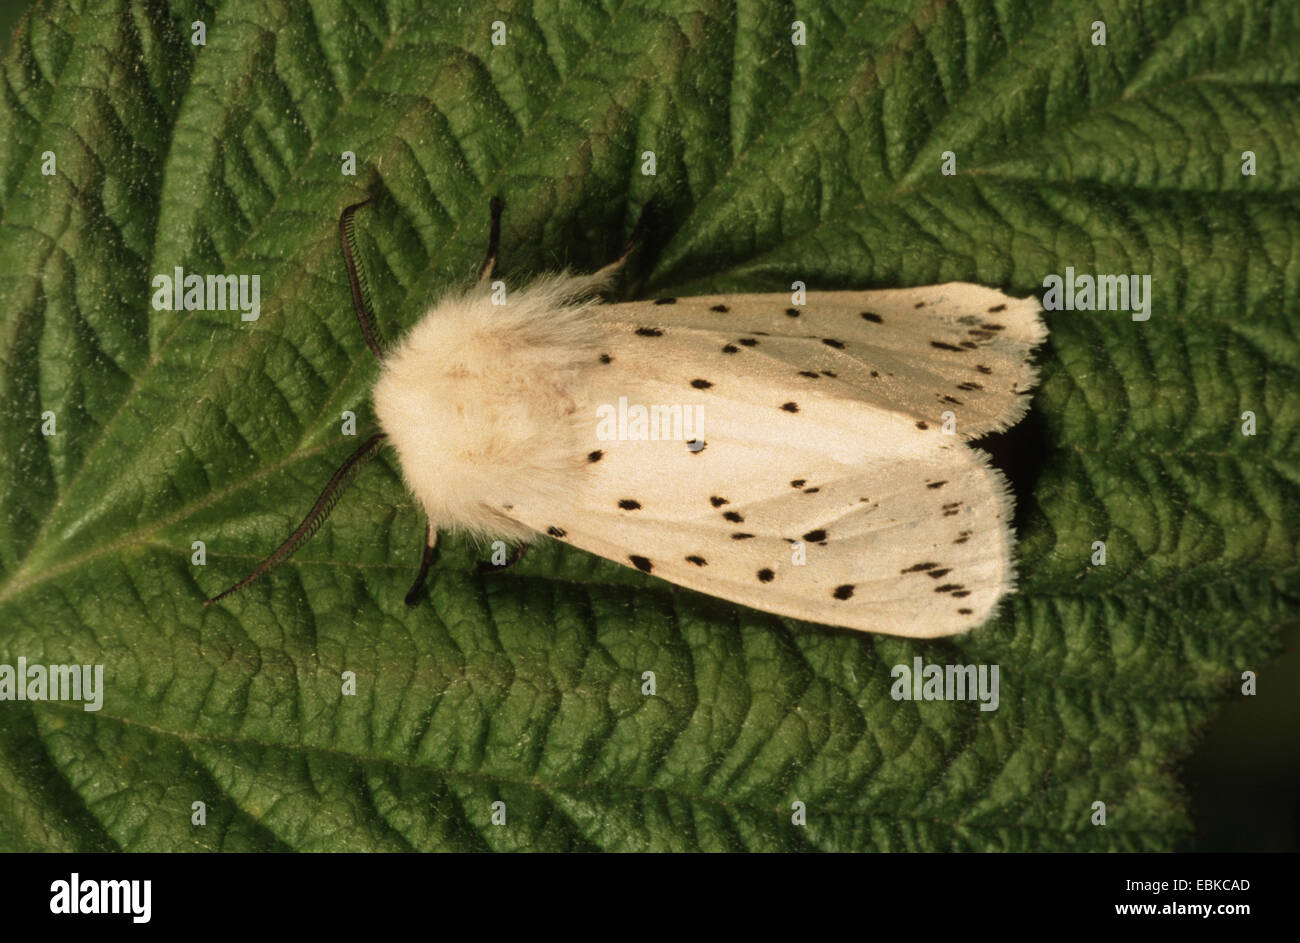 White ermine moth (Spilosoma lubricipeda, Spilosoma menthastri), sitting on a leaf, Germany Stock Photo